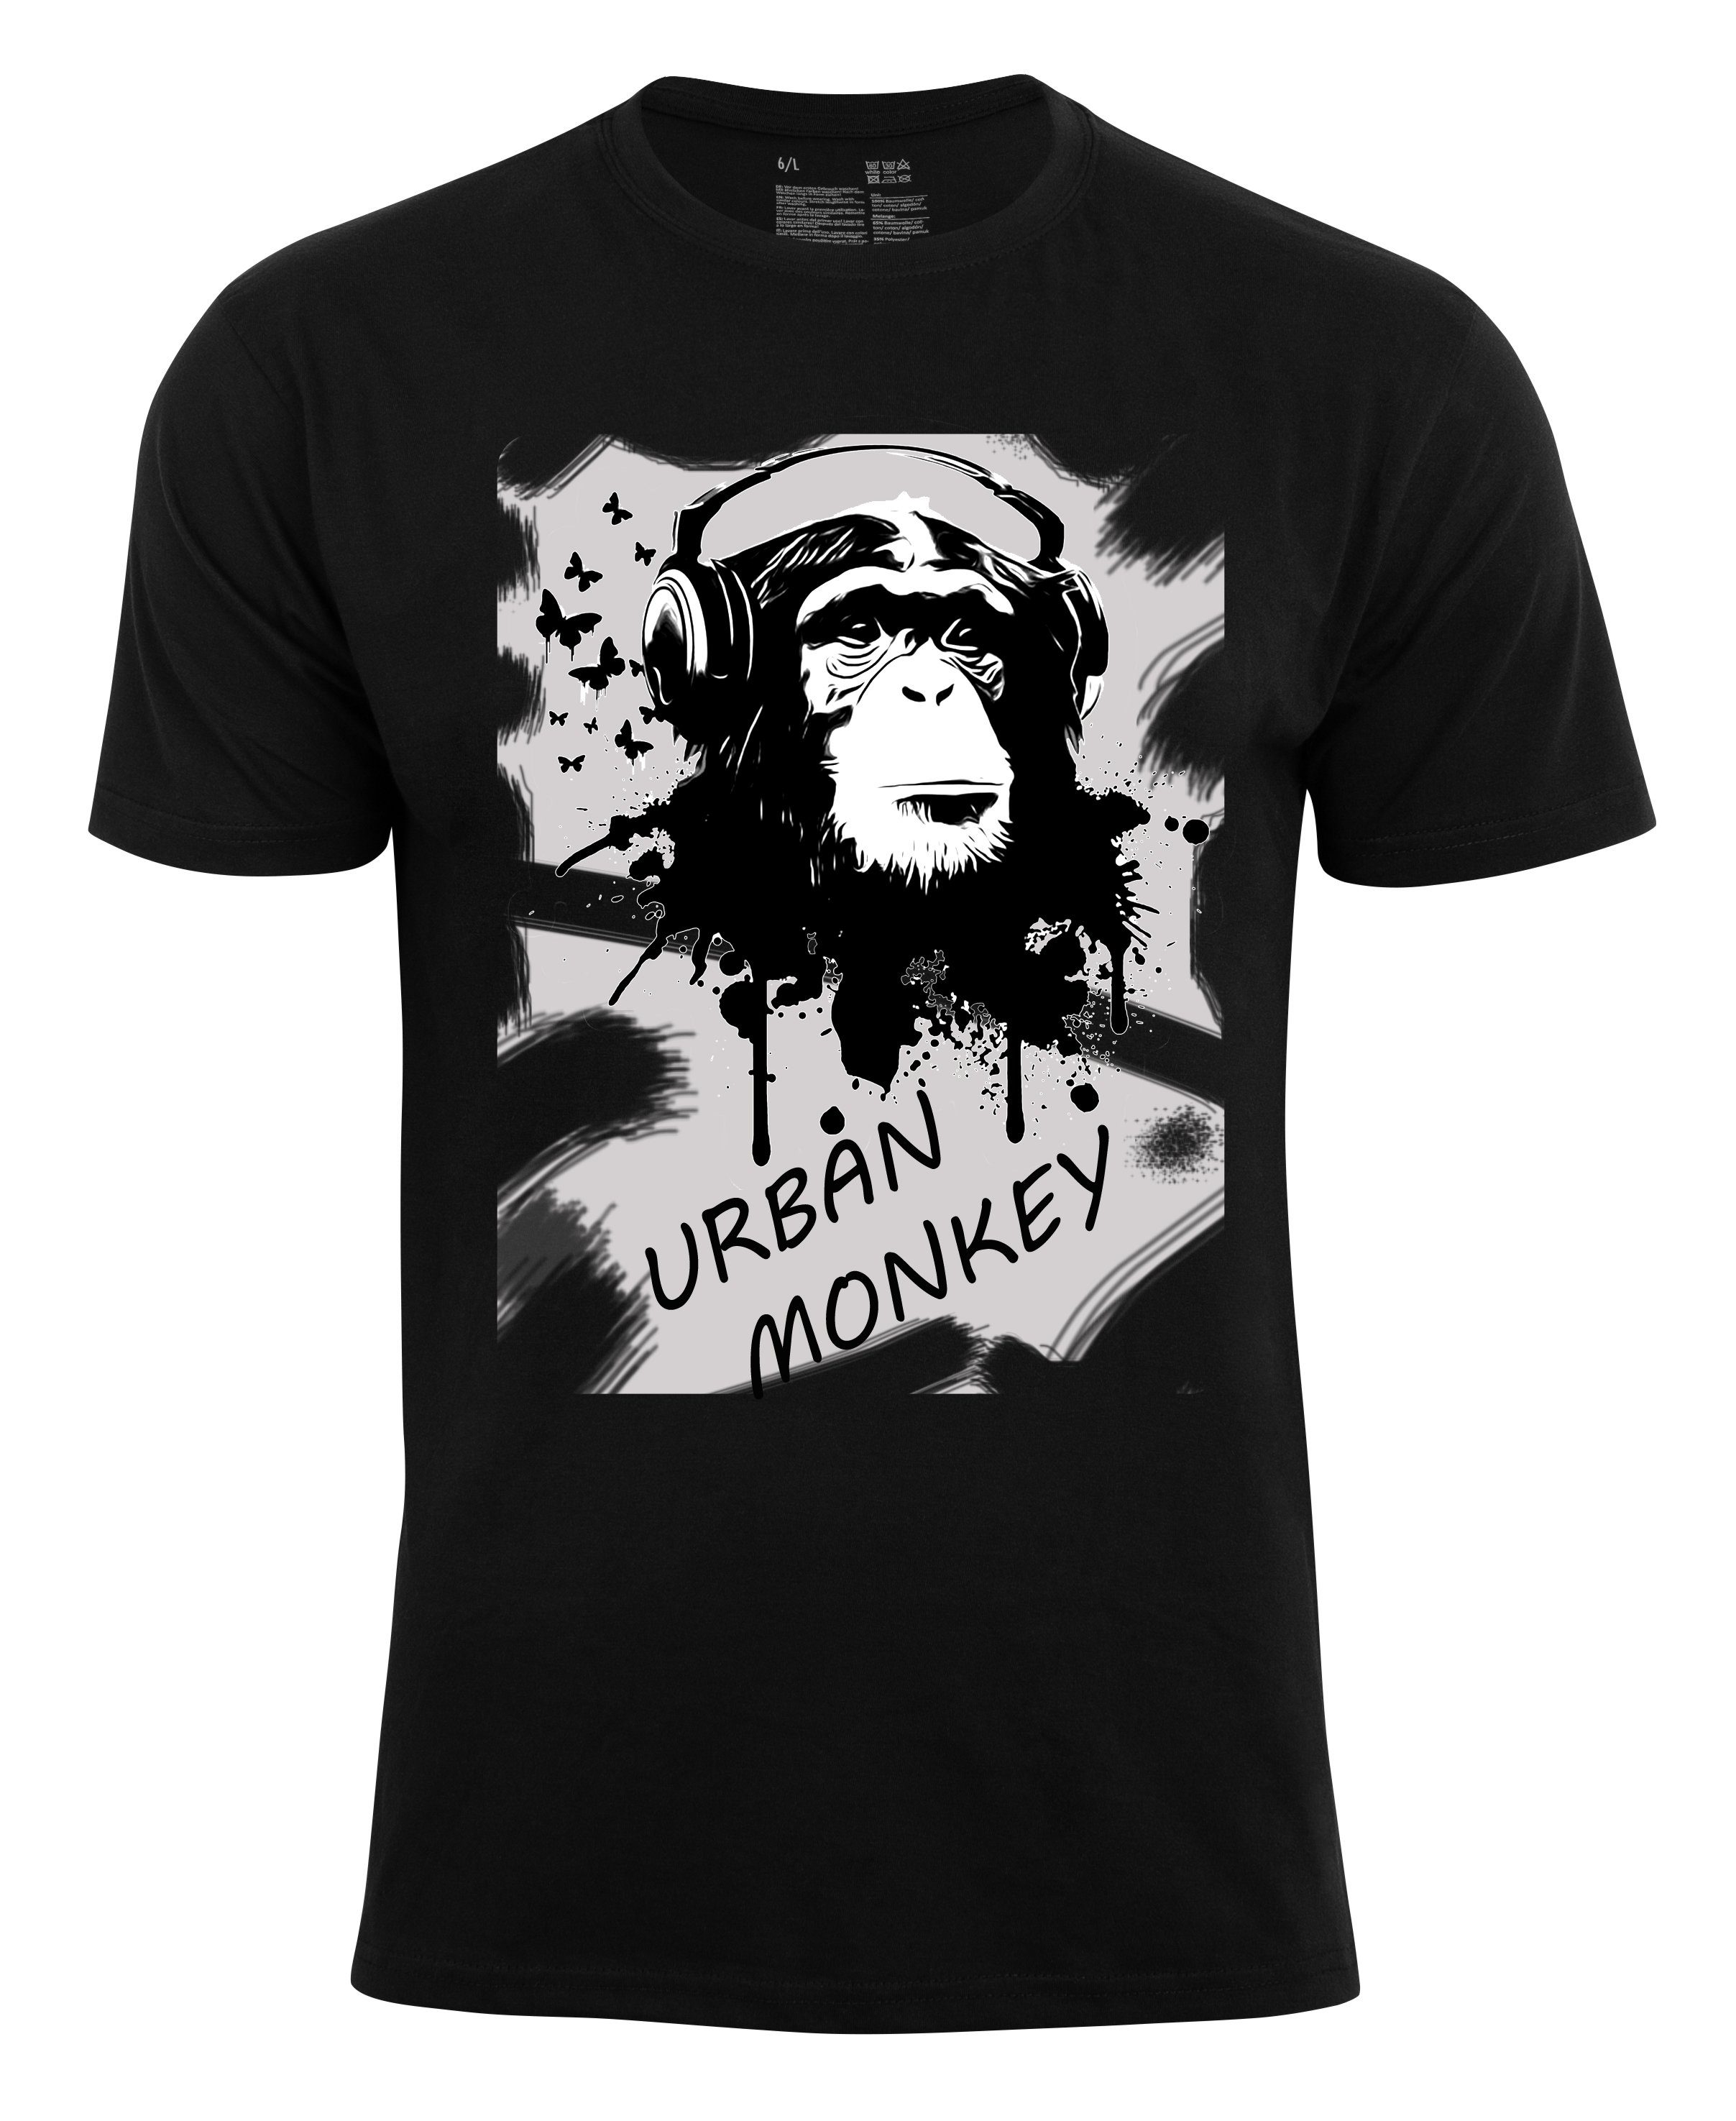 Cotton Prime® T-Shirt "URBAN MONKEY" schwarz